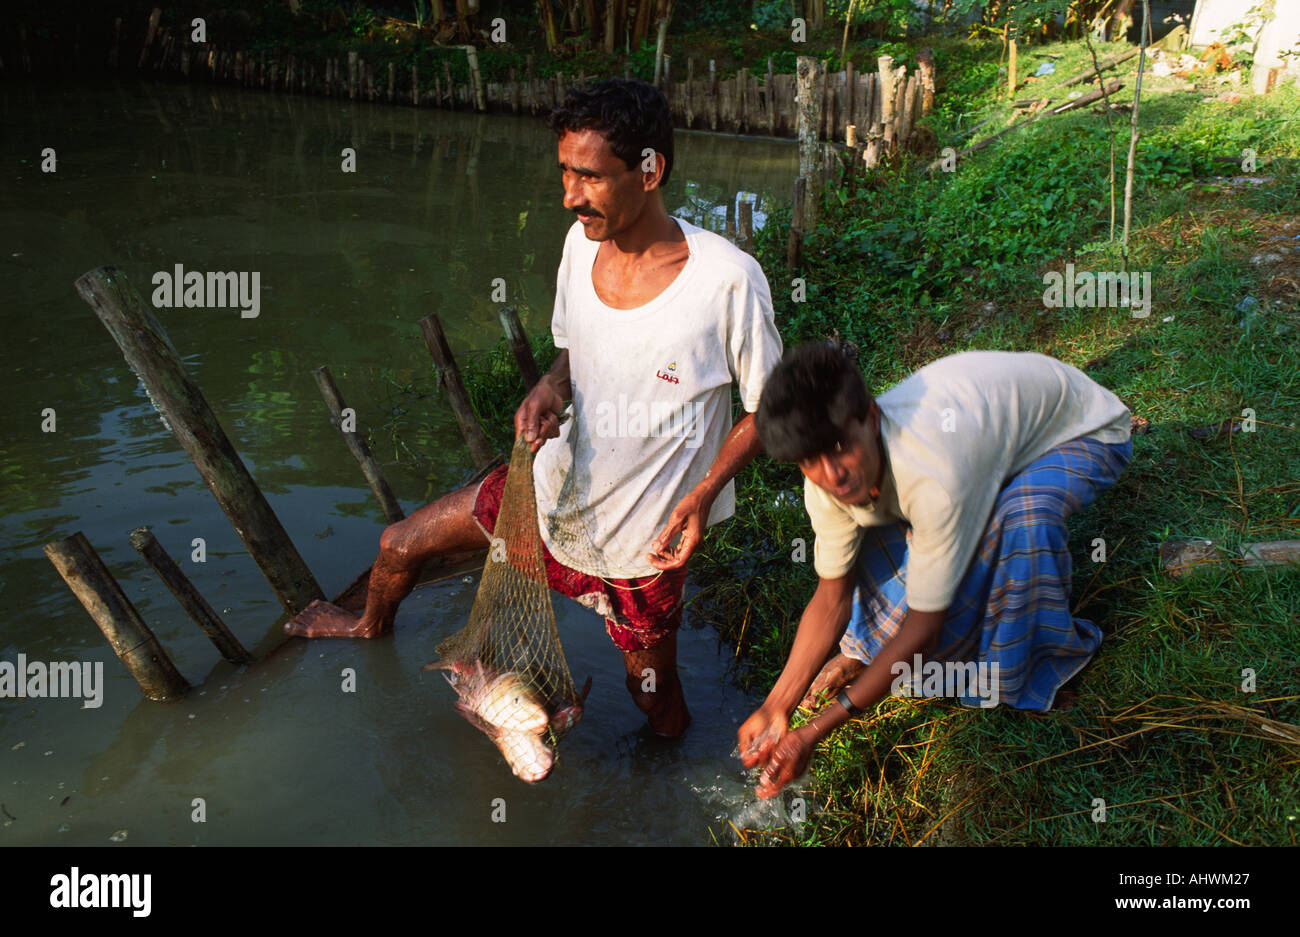 Catching fish on a fish farm, Bangladesh Stock Photo